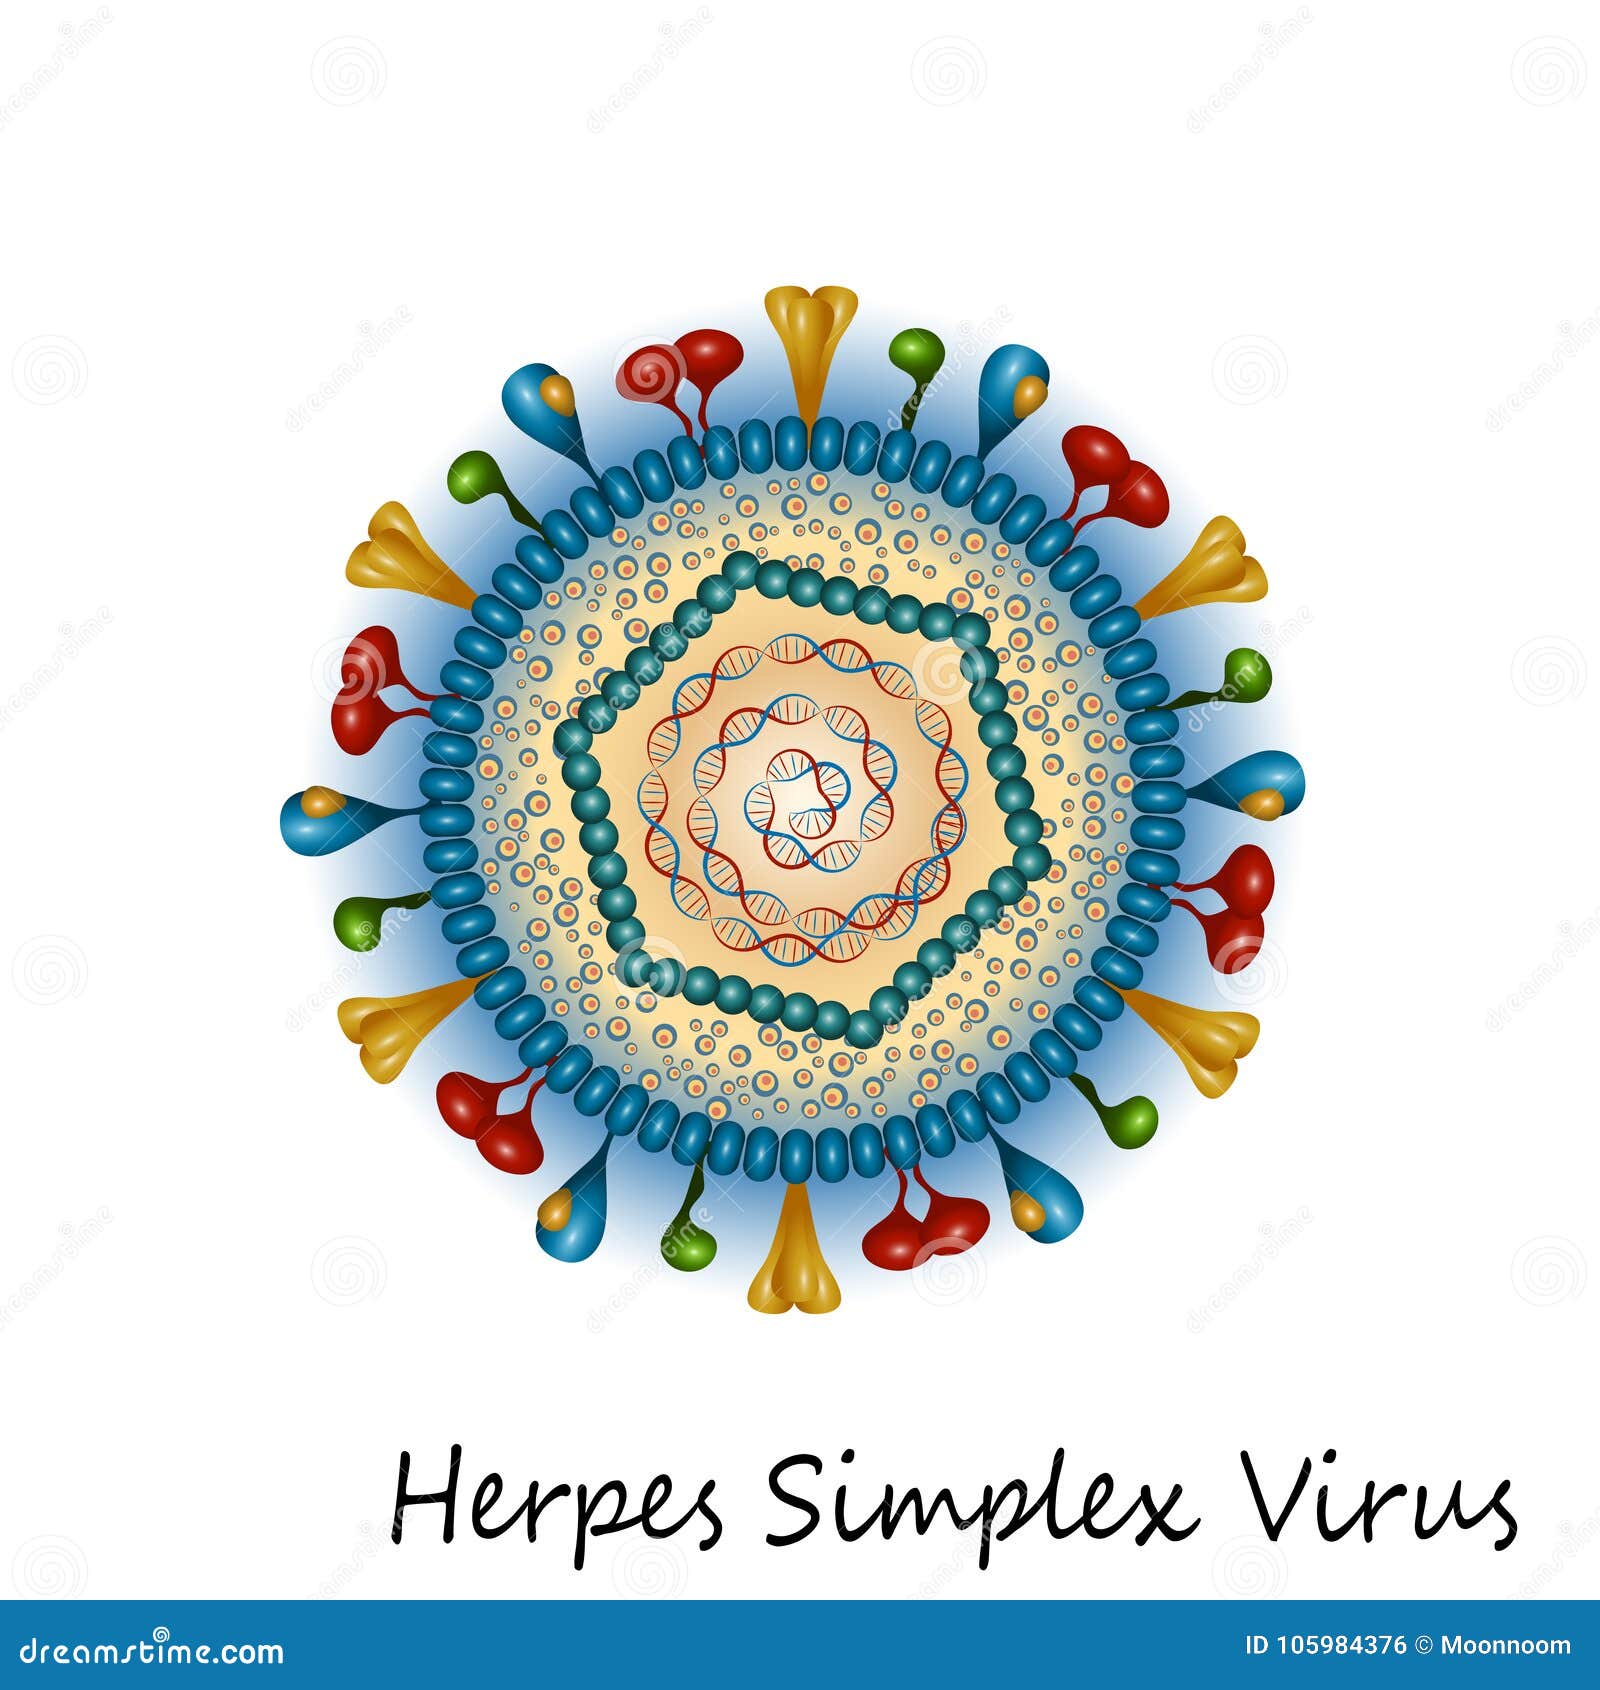 herpes simplex virus particle structure